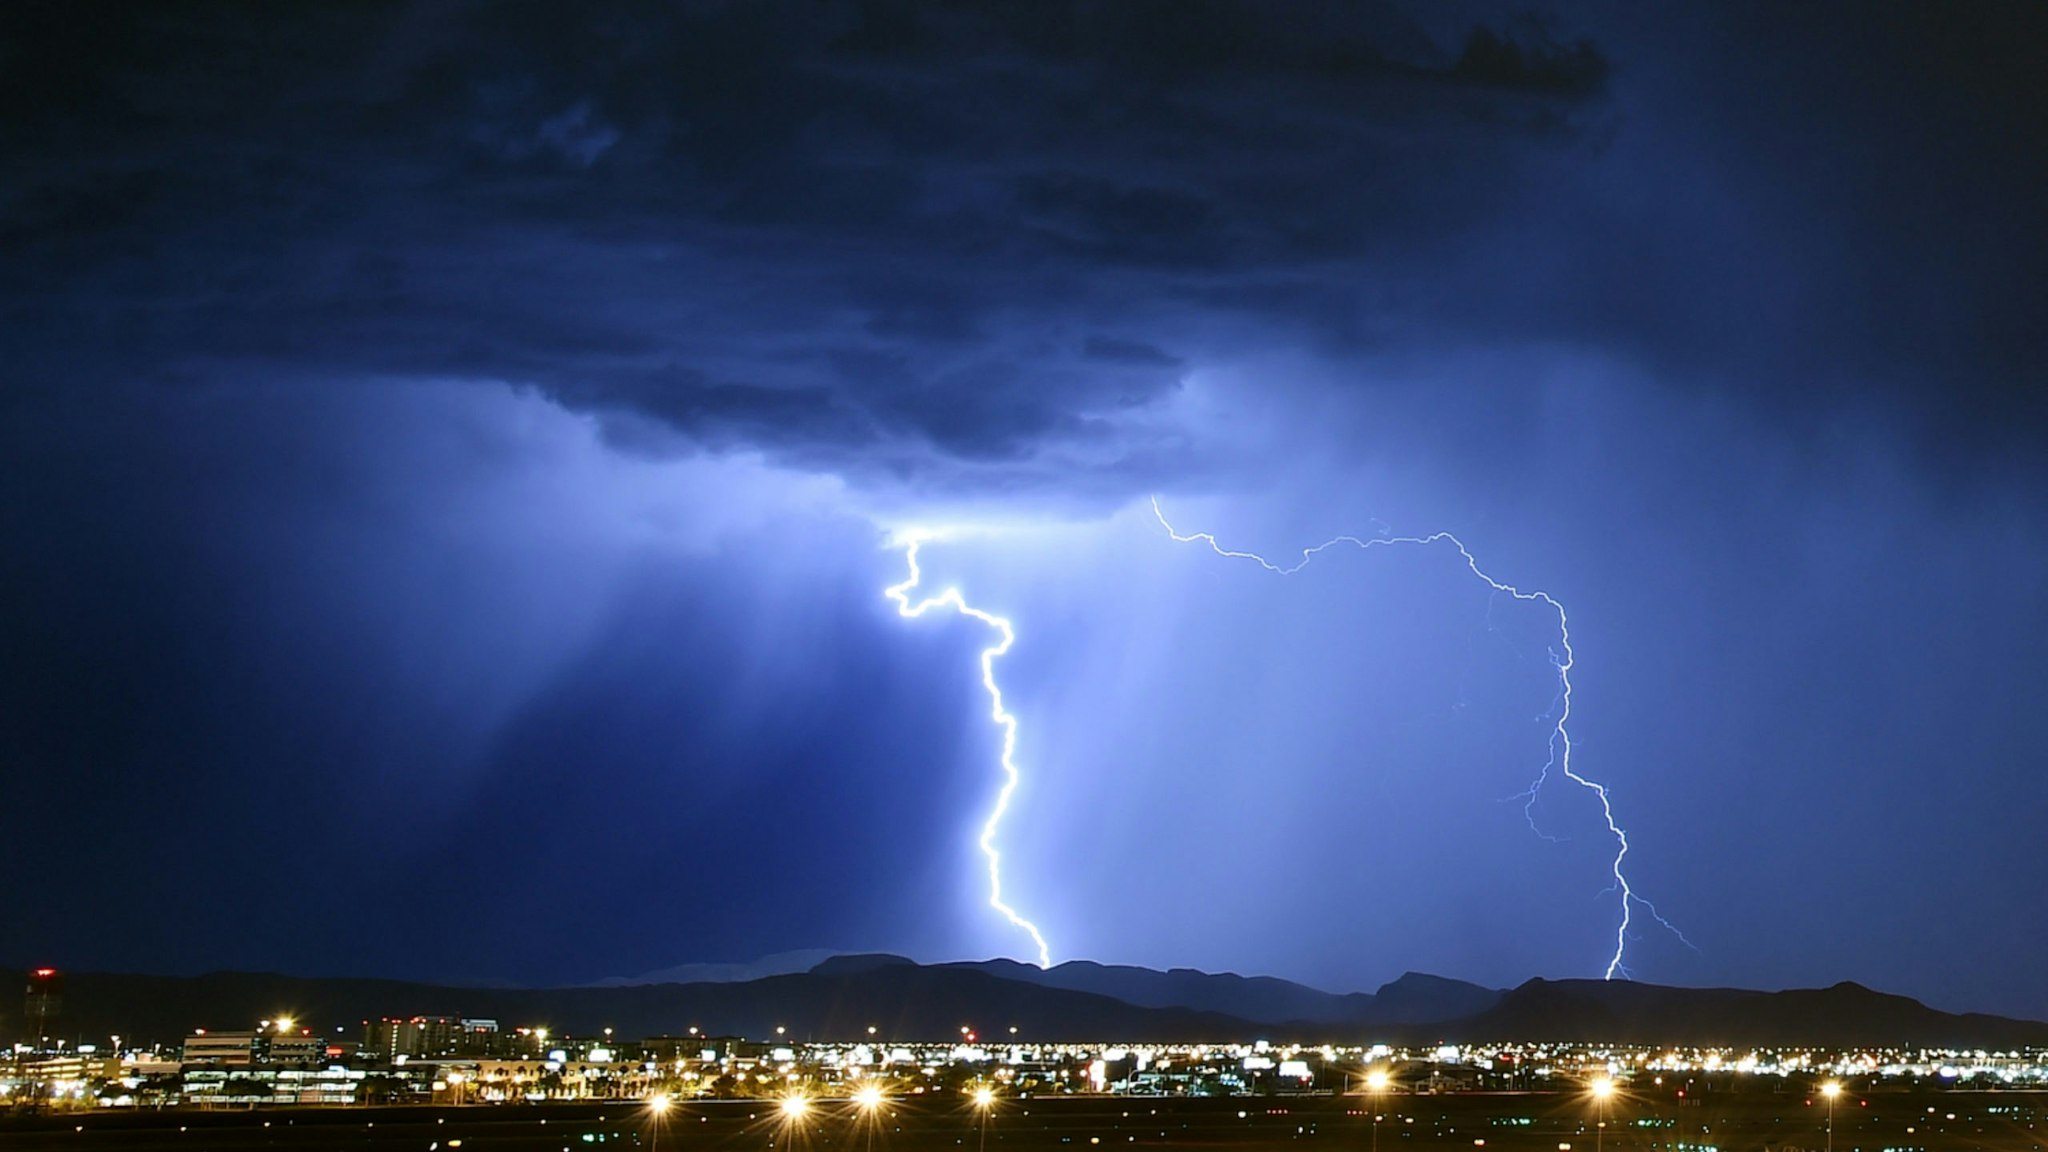 Lightning strikes during a thunderstorm on July 6, 2015 in Las Vegas, Nevada.